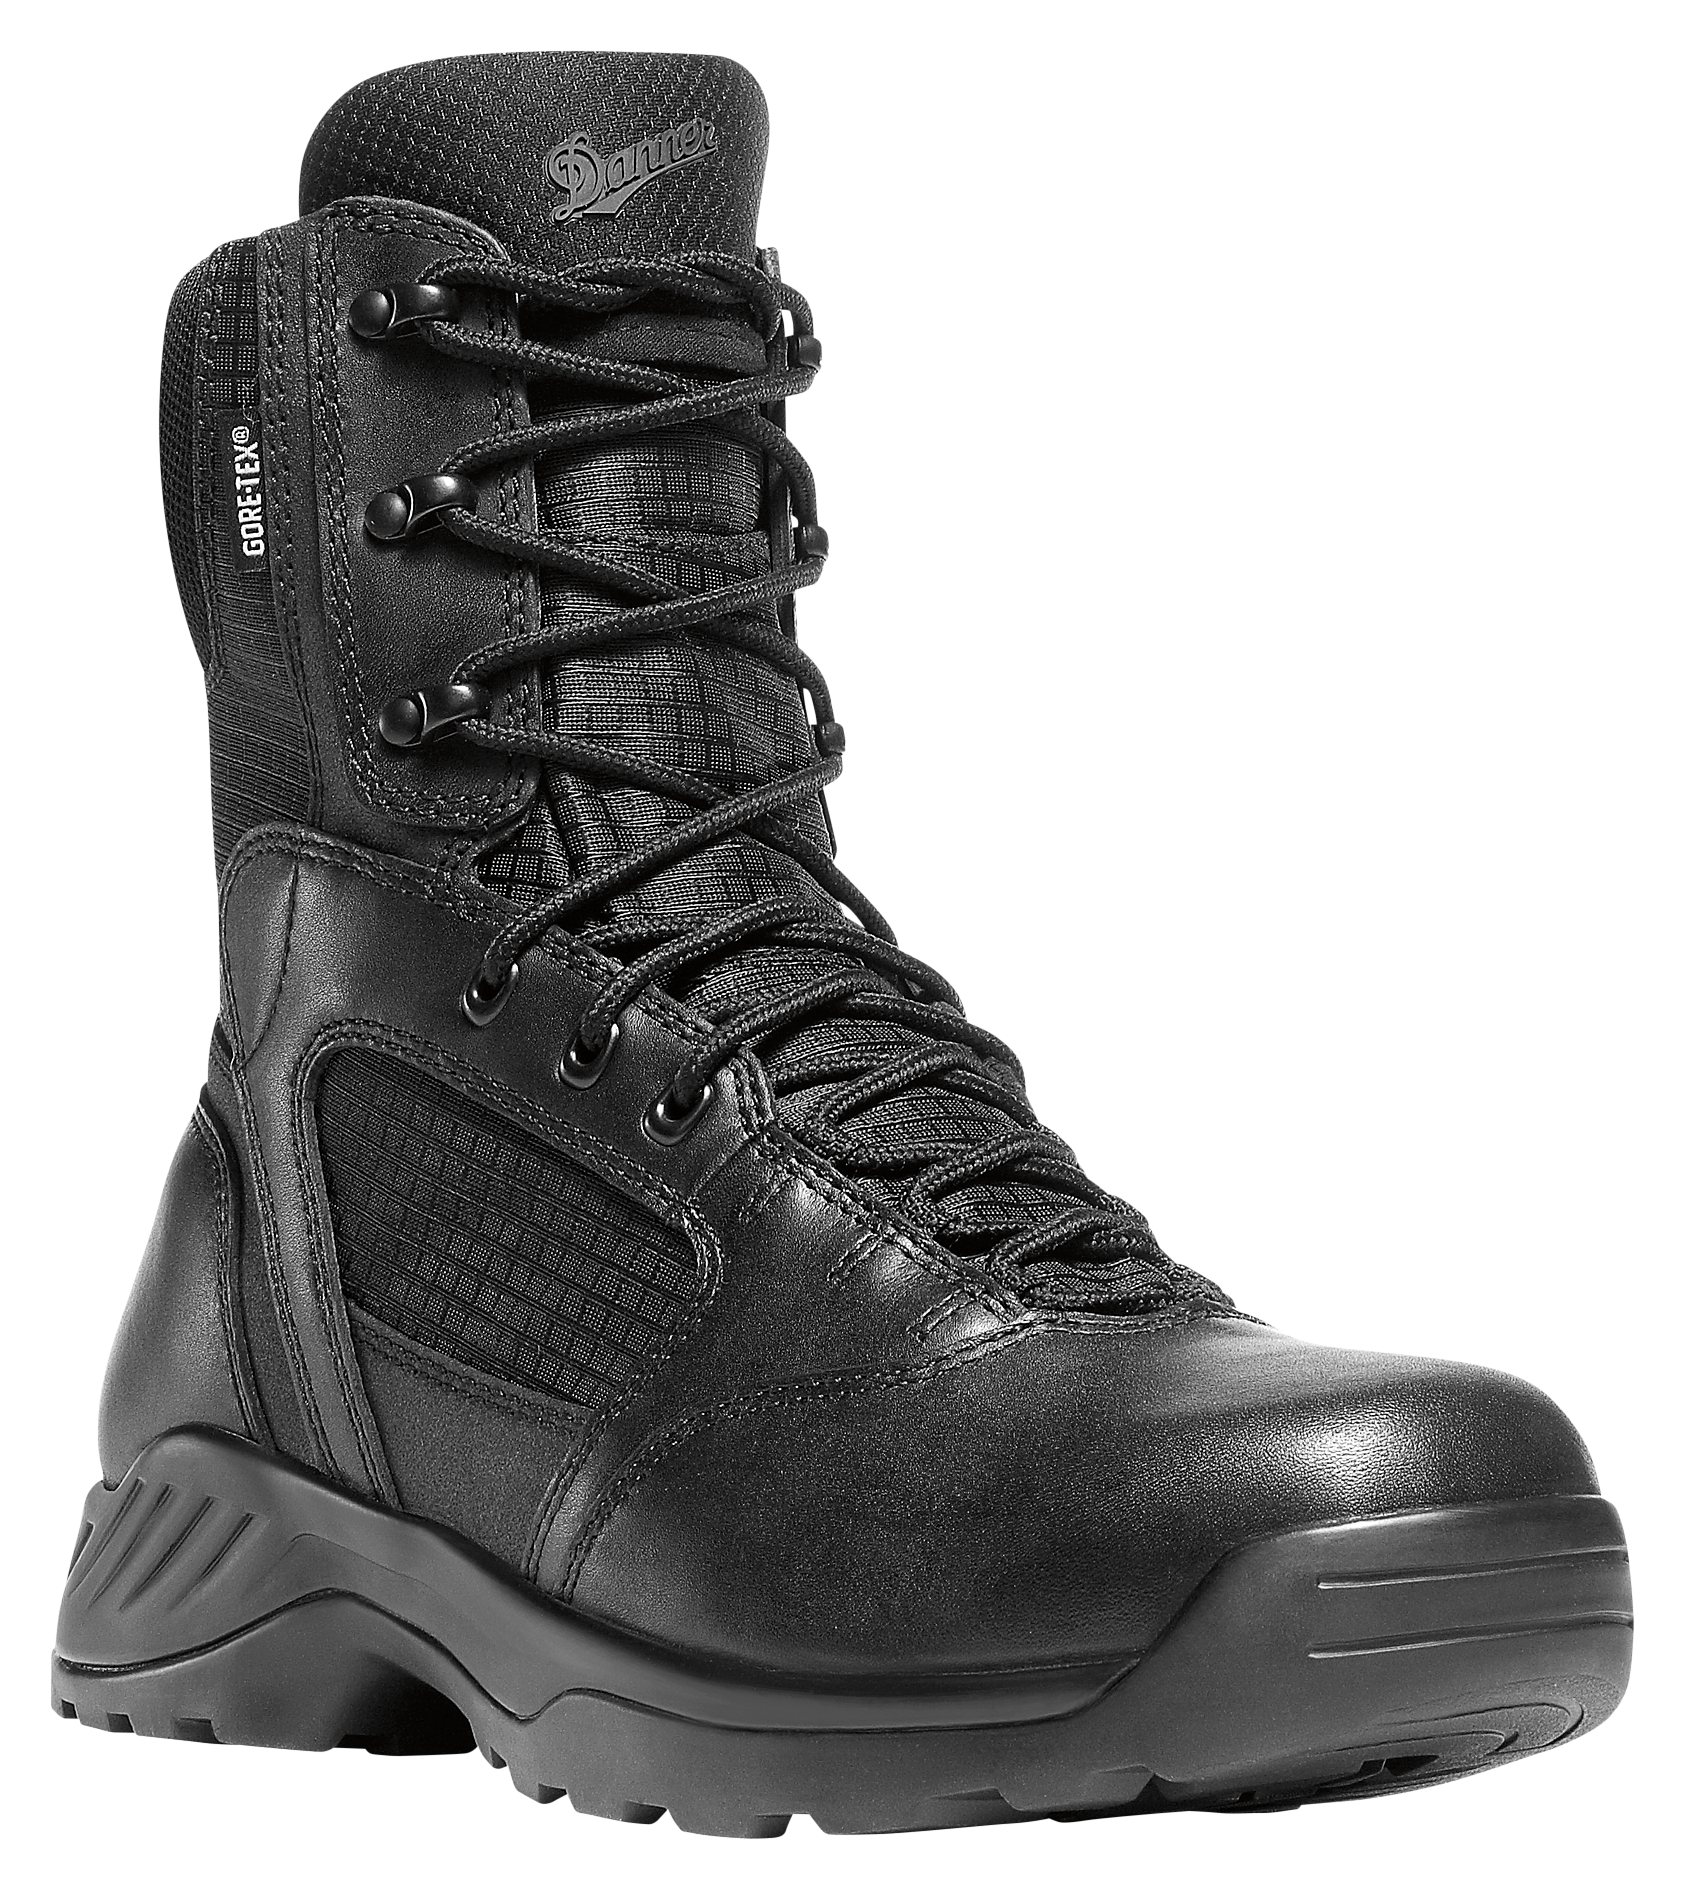 Danner Kinetic GTX Side-Zip Waterproof Tactical Duty Boots for Men - Black - 11M